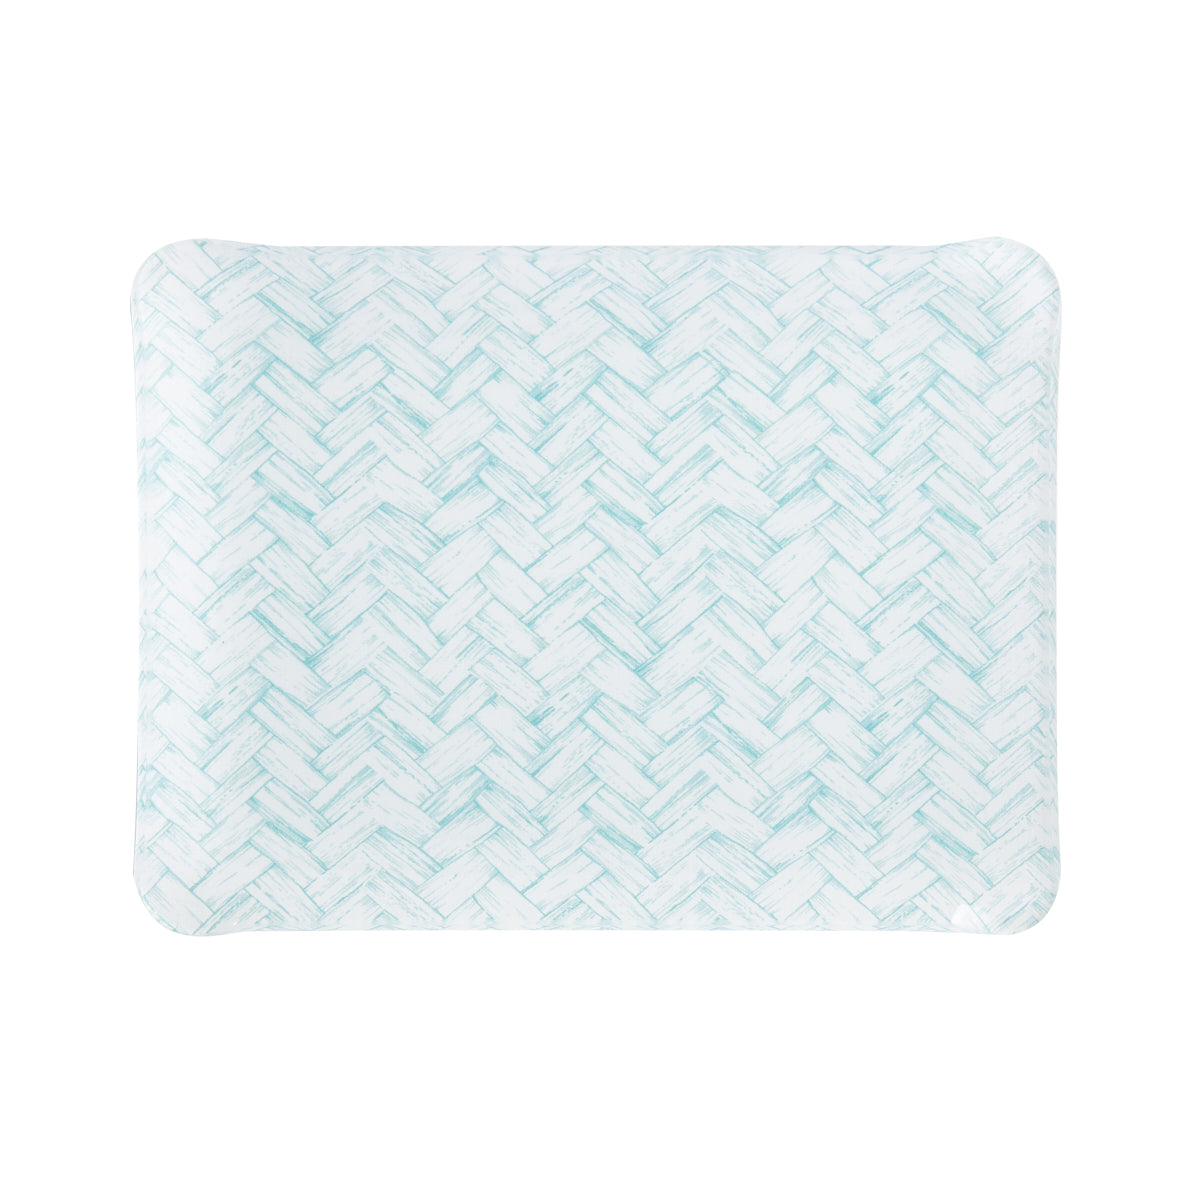 Nina Campbell Fabric Tray Small - Aqua Basketweave